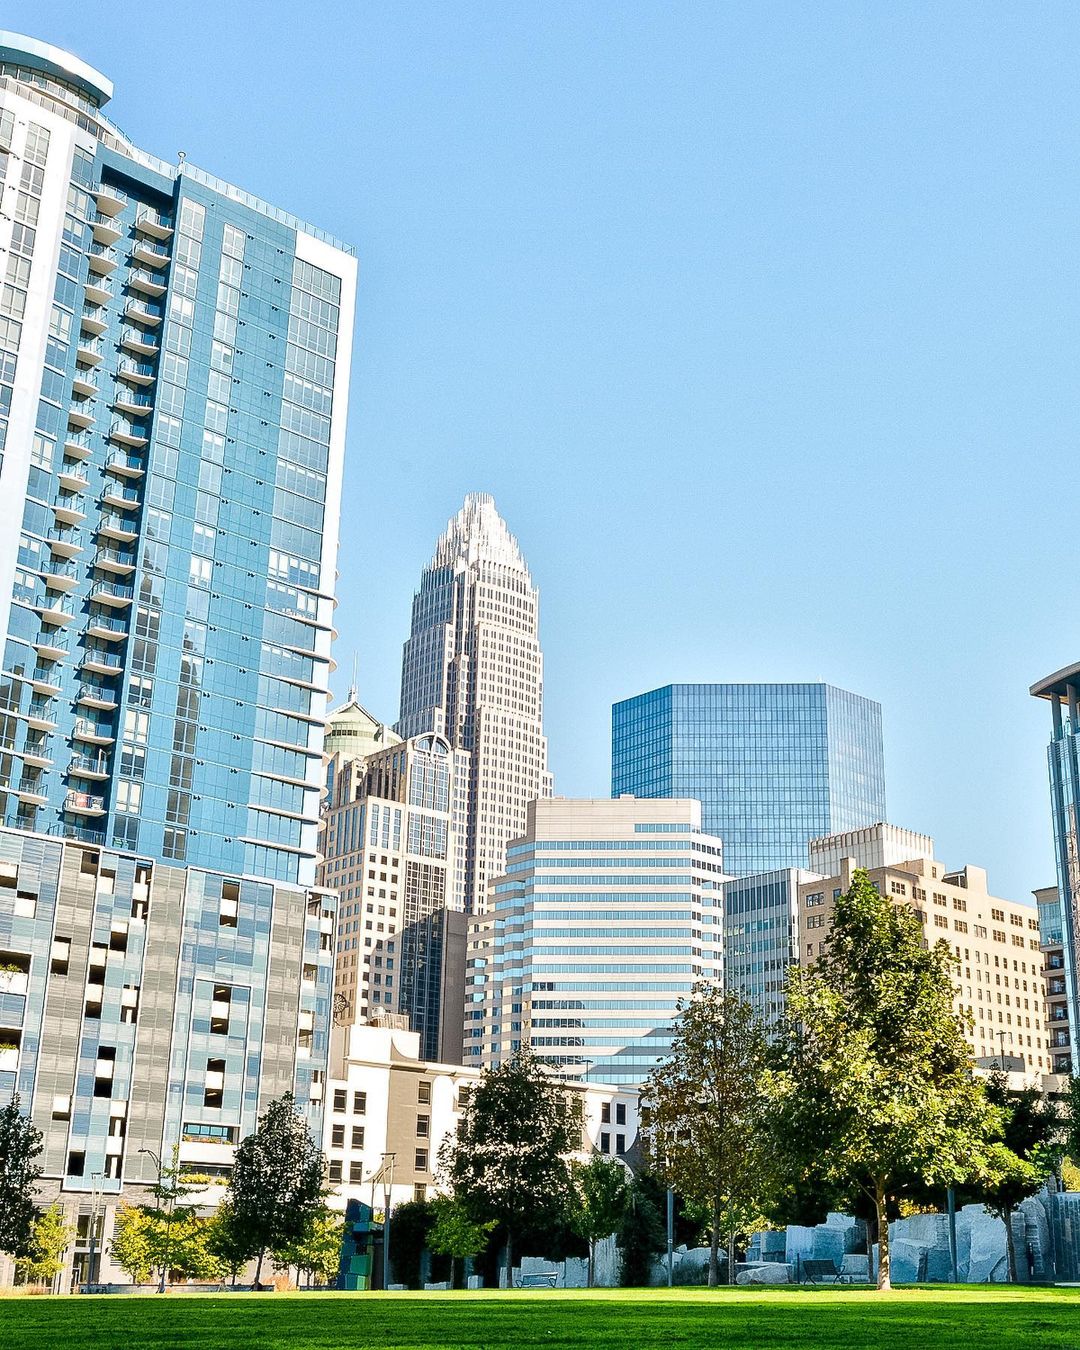 Street View of the Charlotte, NC skyline. Photo by Instagram user @stufftodoincharlotte